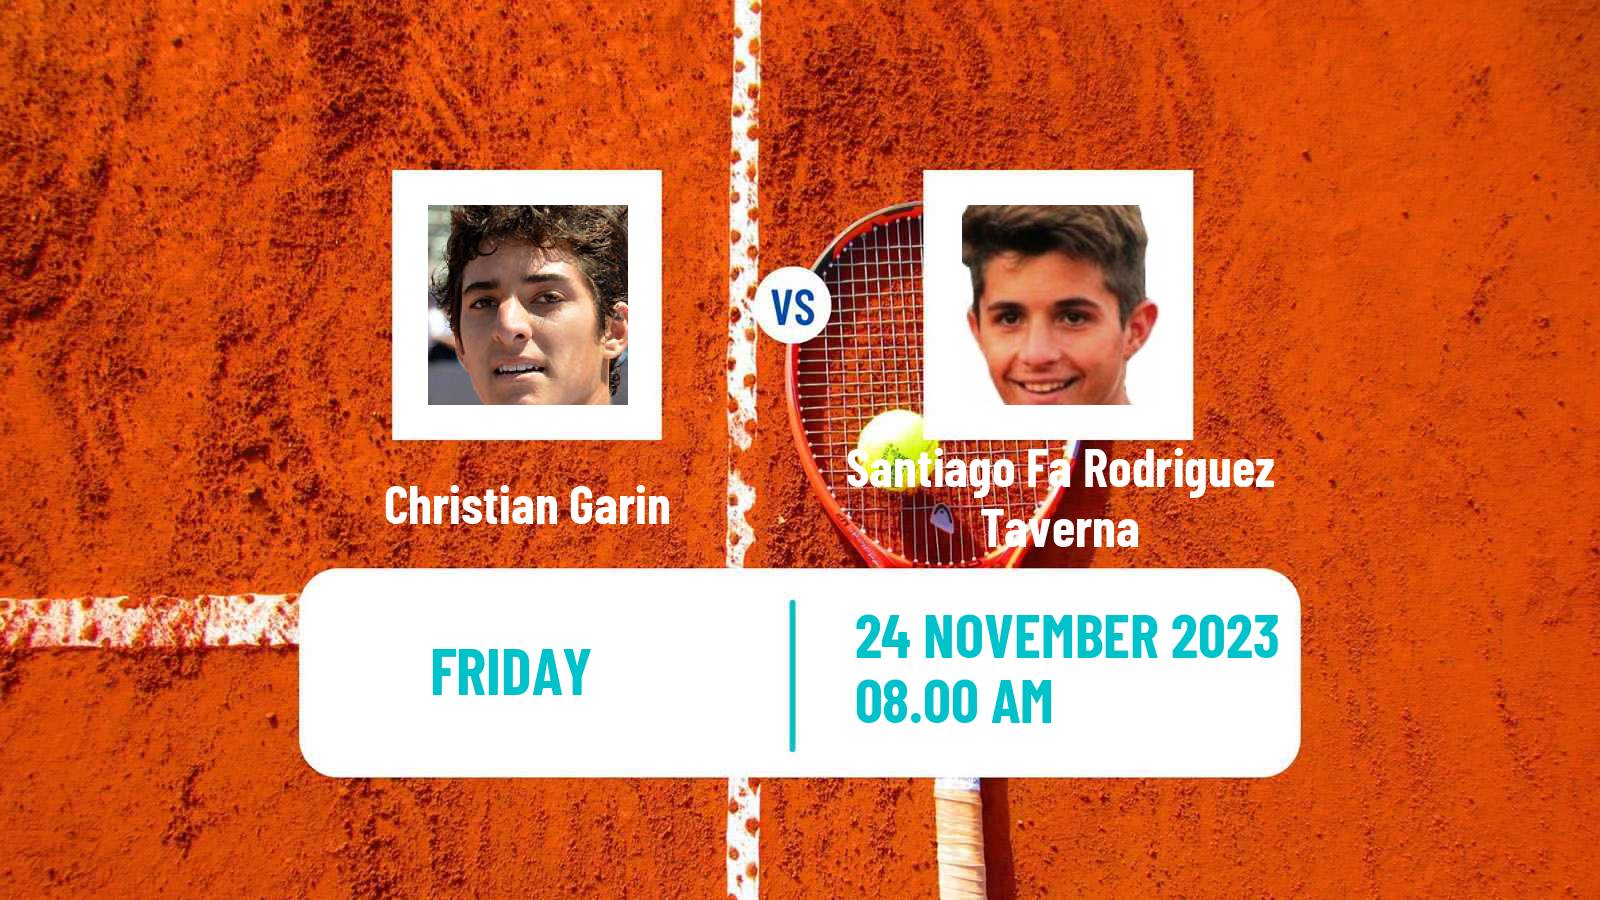 Tennis Brasilia Challenger Men Christian Garin - Santiago Fa Rodriguez Taverna